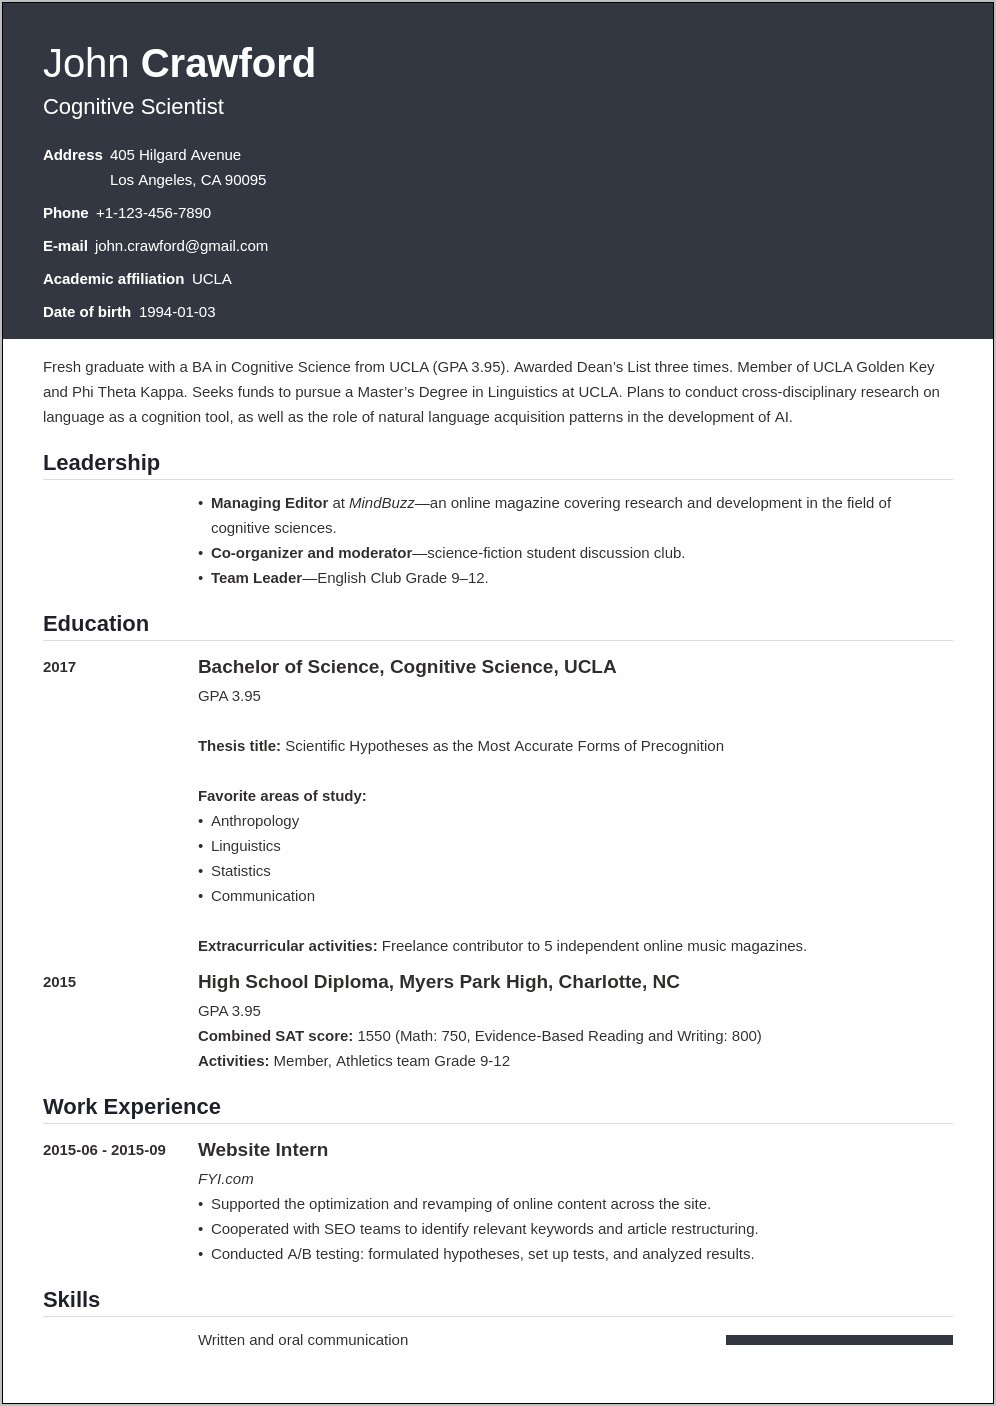 Resume Format Malaysia Job Application